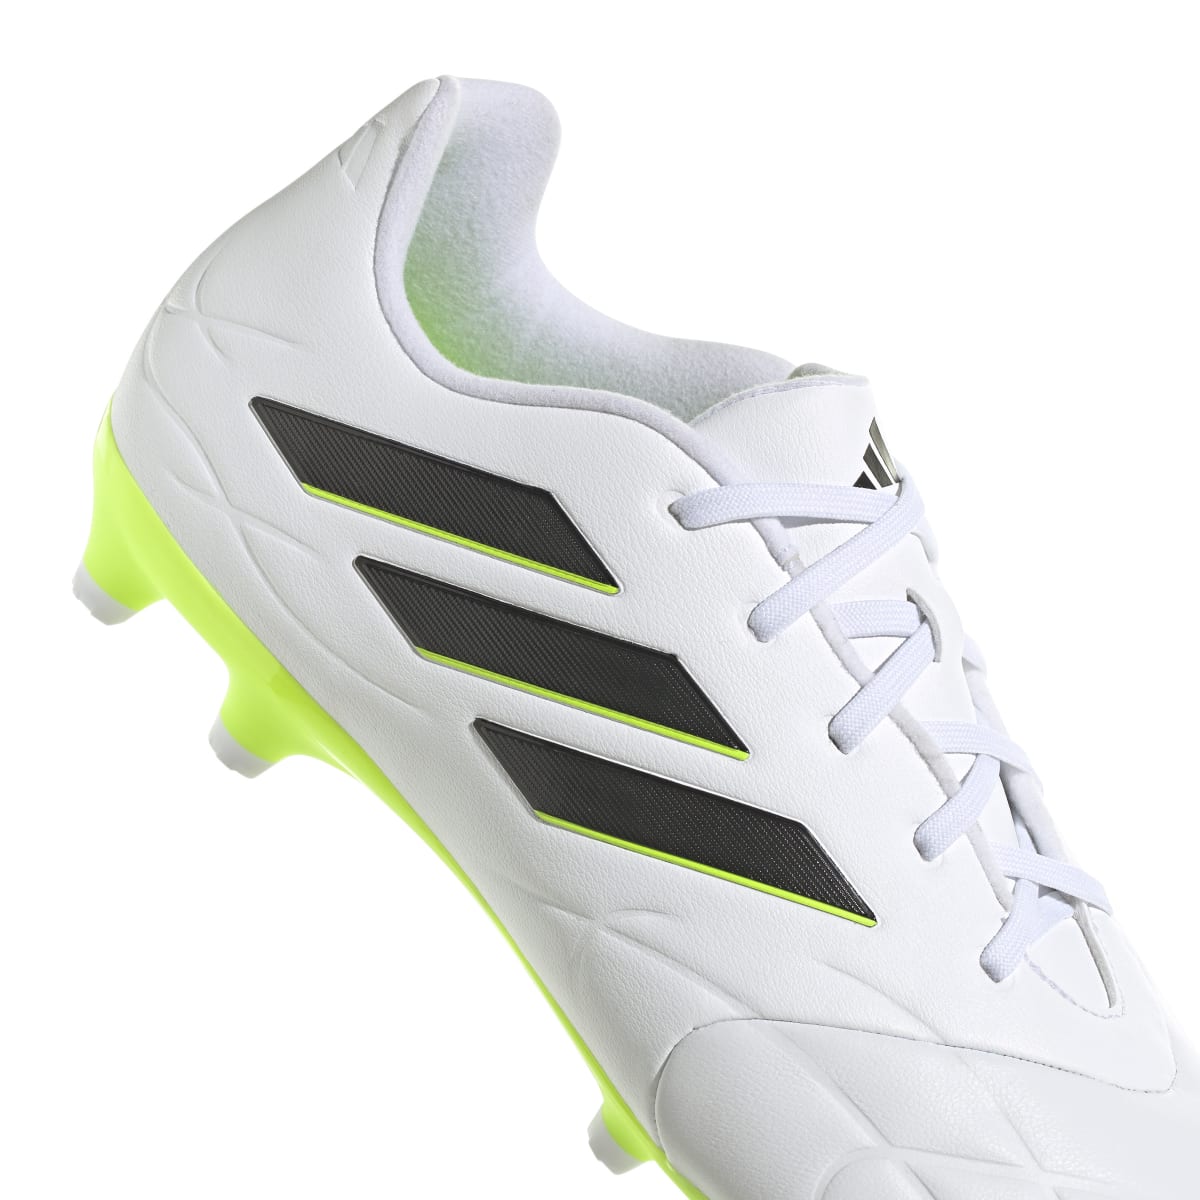 ADIDAS HQ8984 COPA PURE.3 FG MN'S (Medium) White/Black/Lemon Leather Soccer Shoes